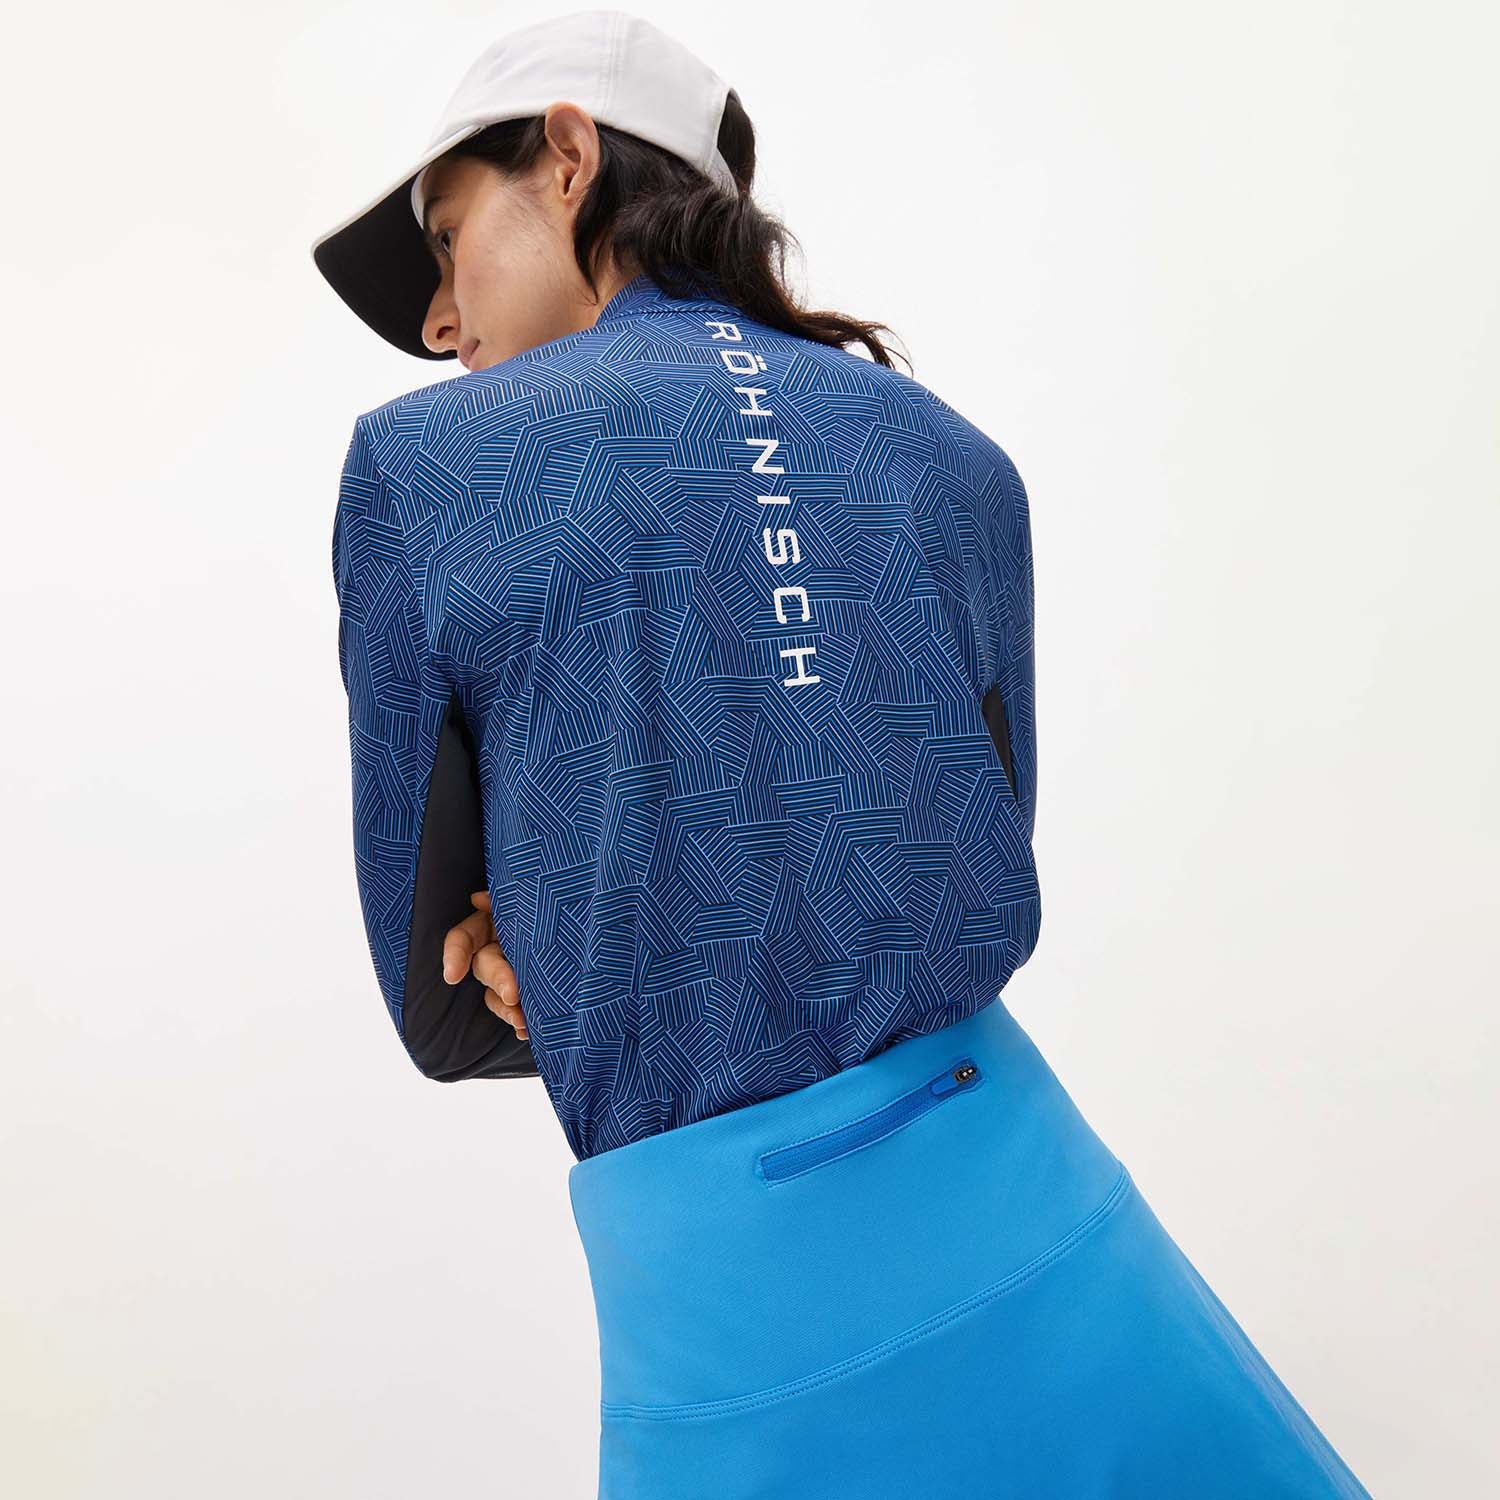 Rohnisch Women's Long Sleeve Printed Top with UPF 50+ in Hexagon Blue